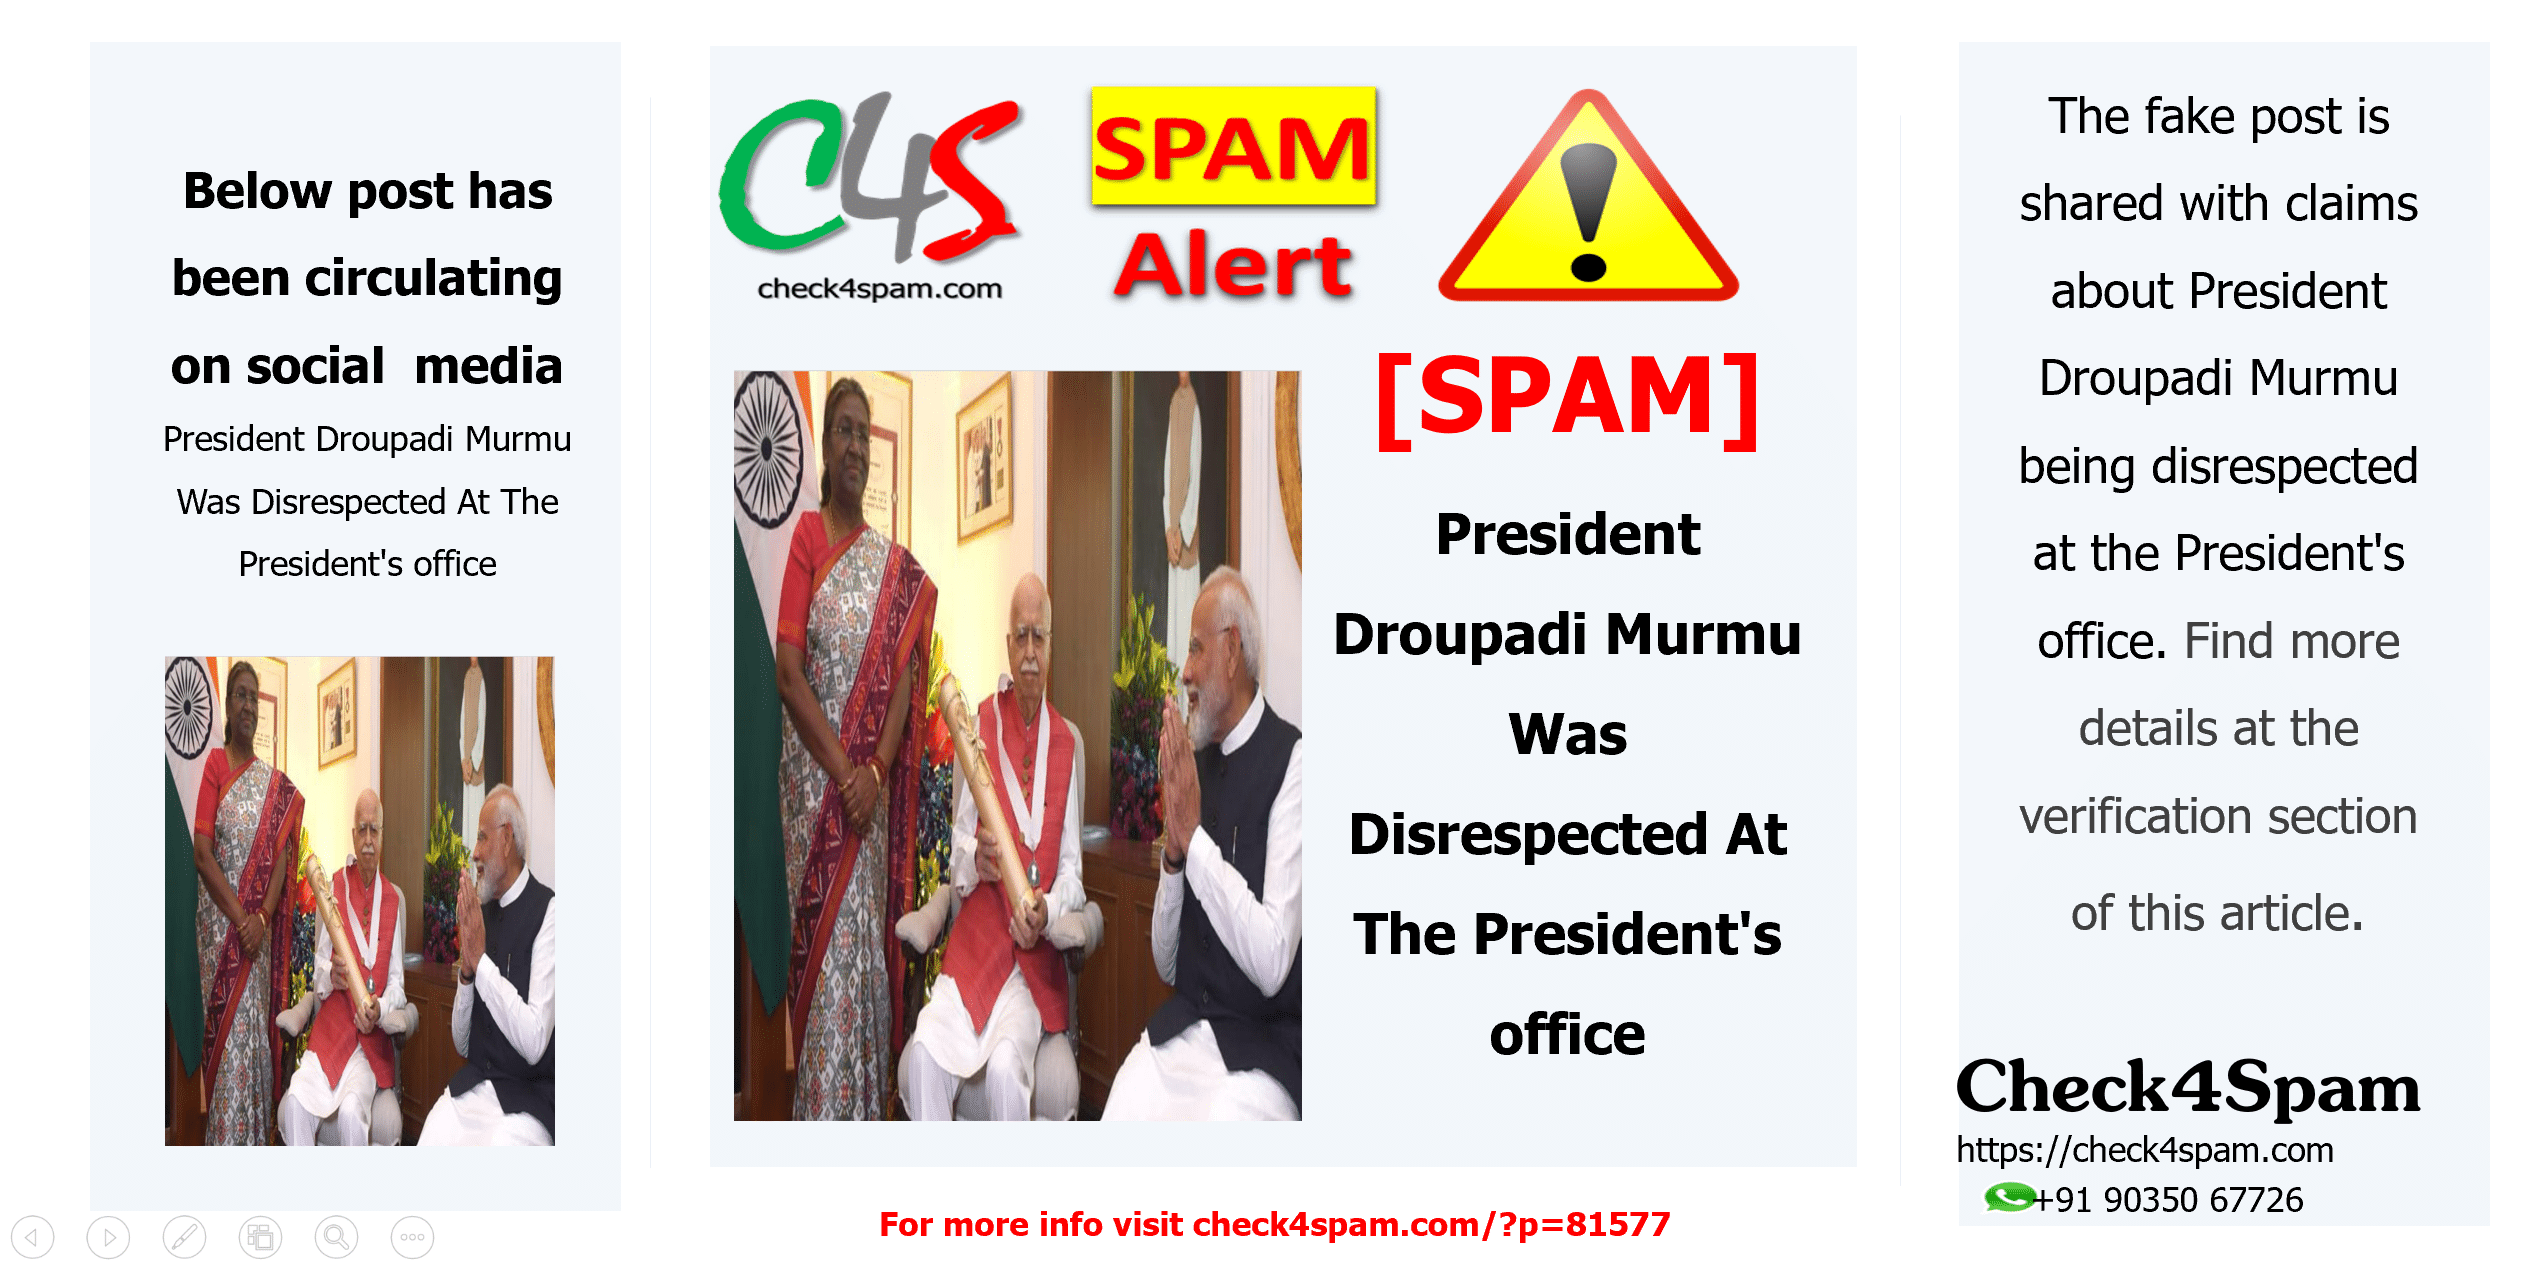 President Droupadi Murmu Was Disrespected At The President's office